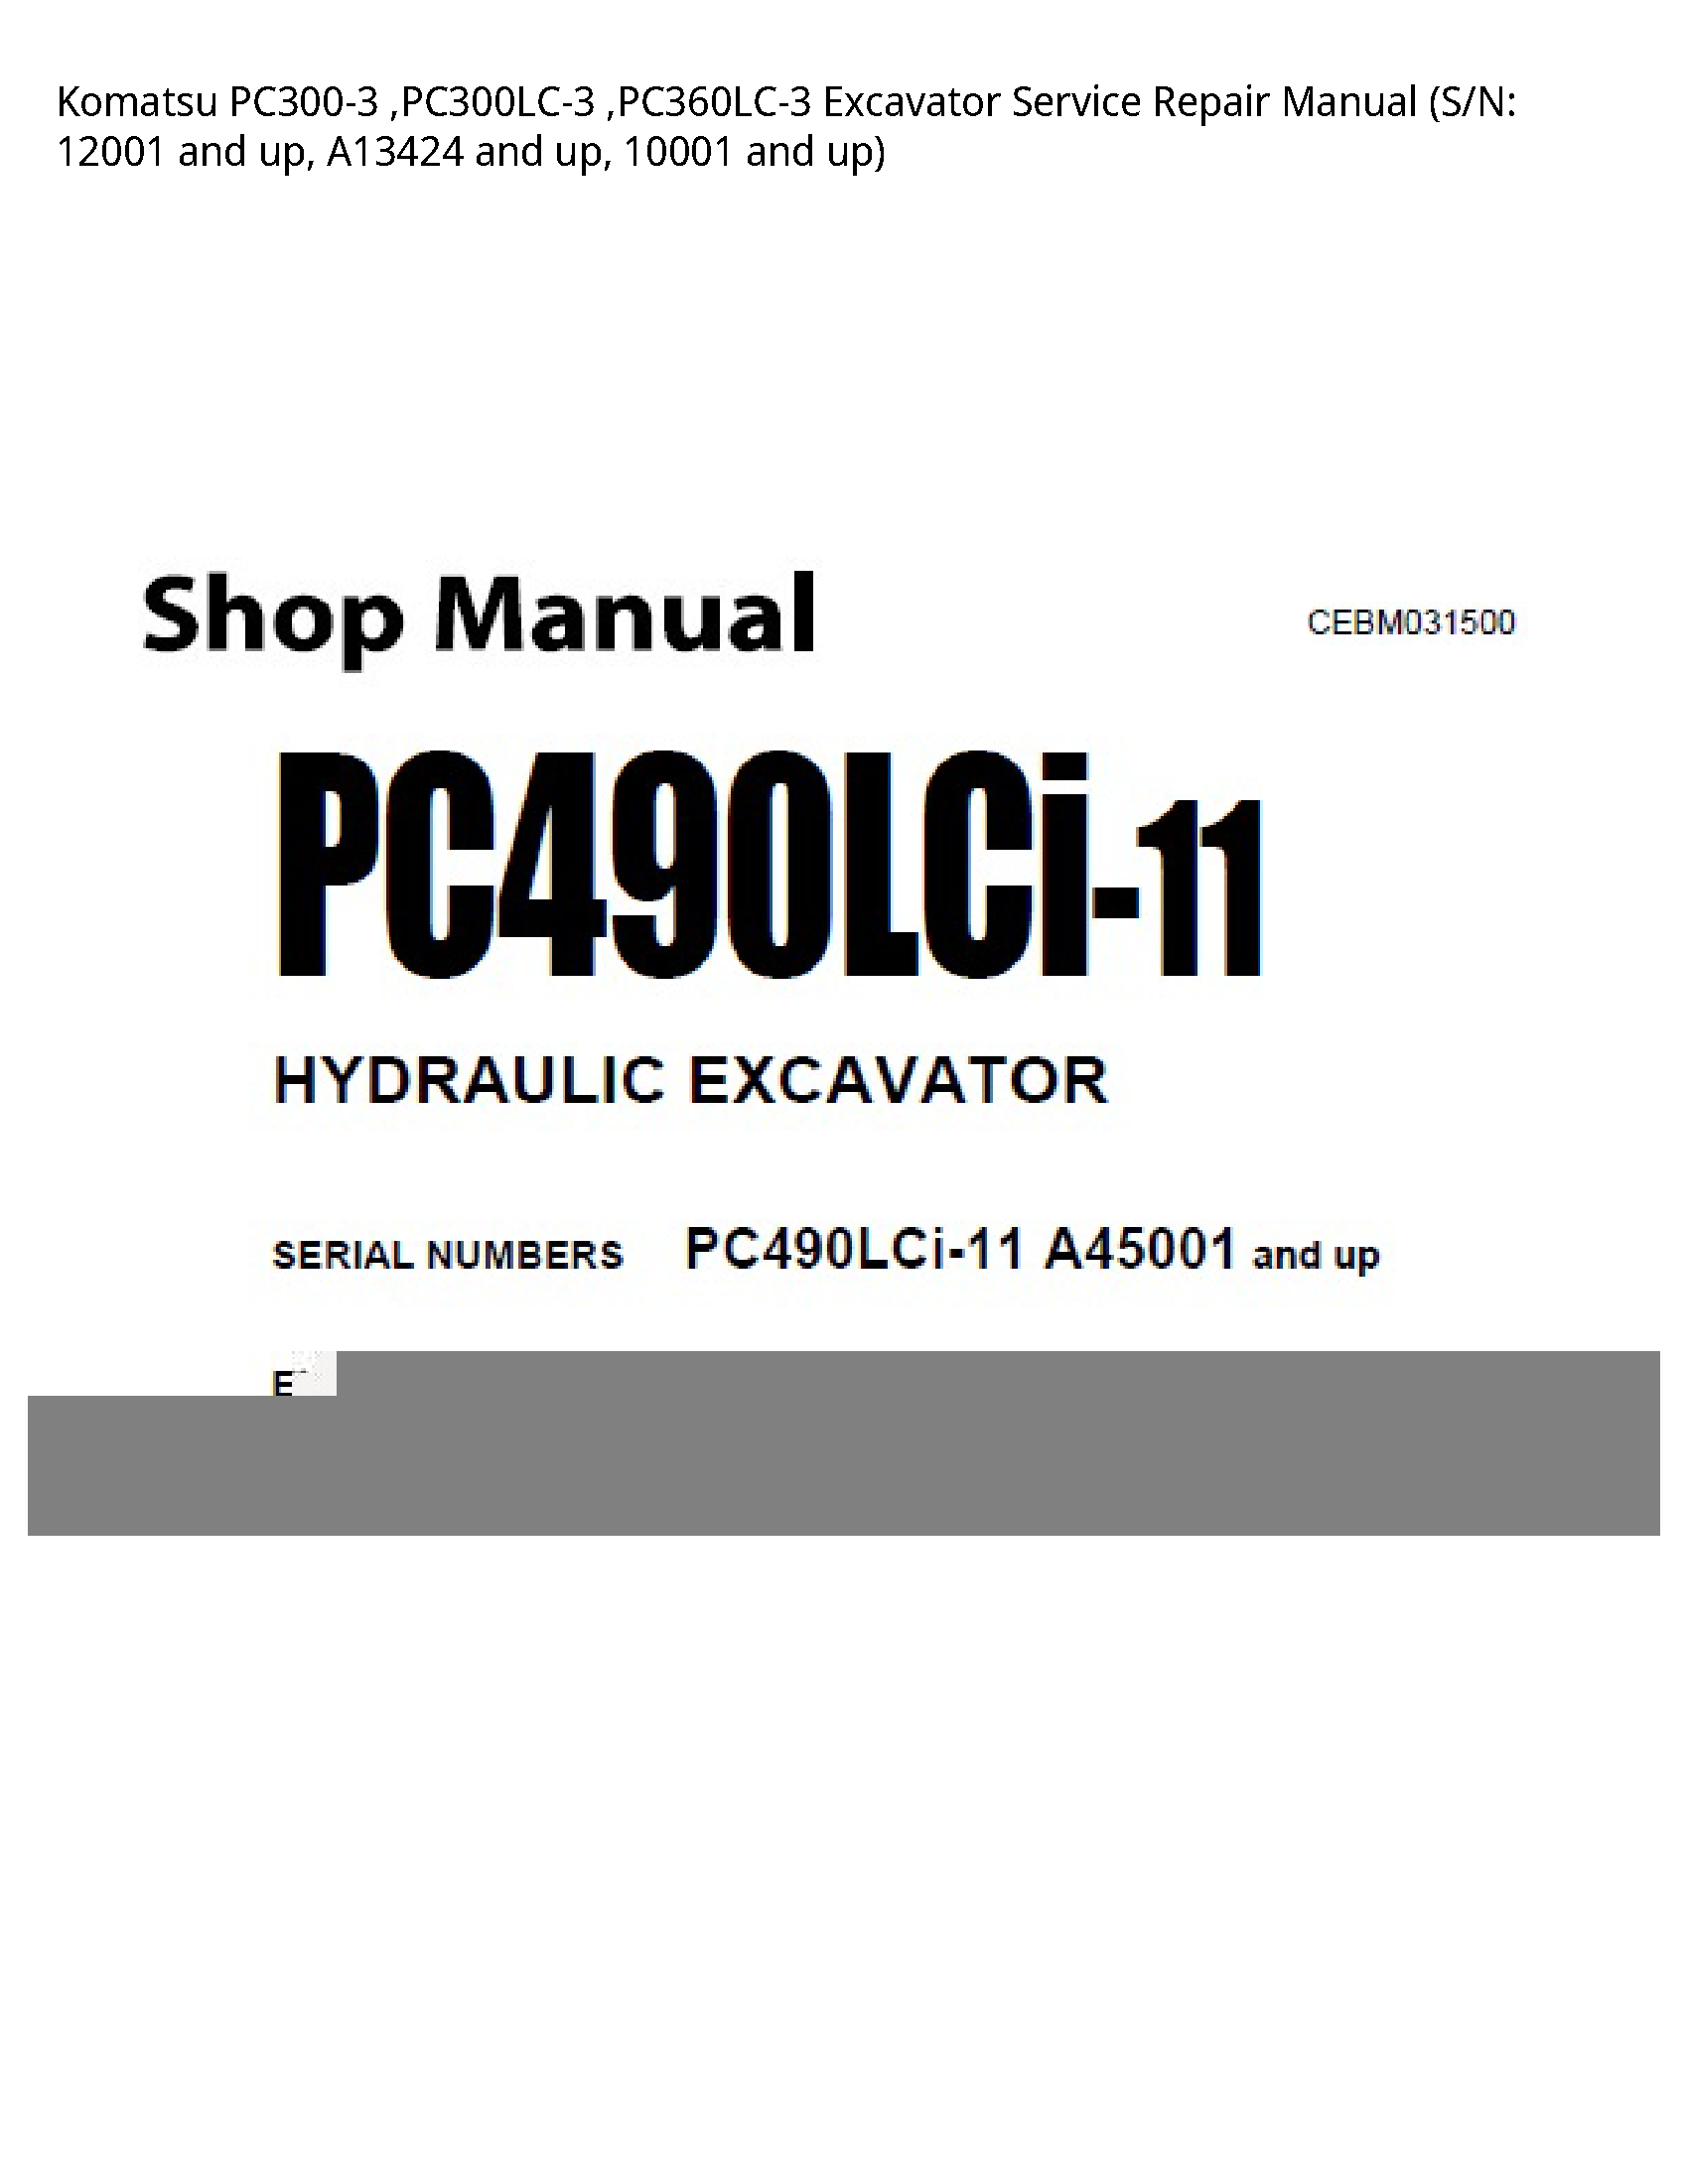 KOMATSU PC300-3 Excavator manual